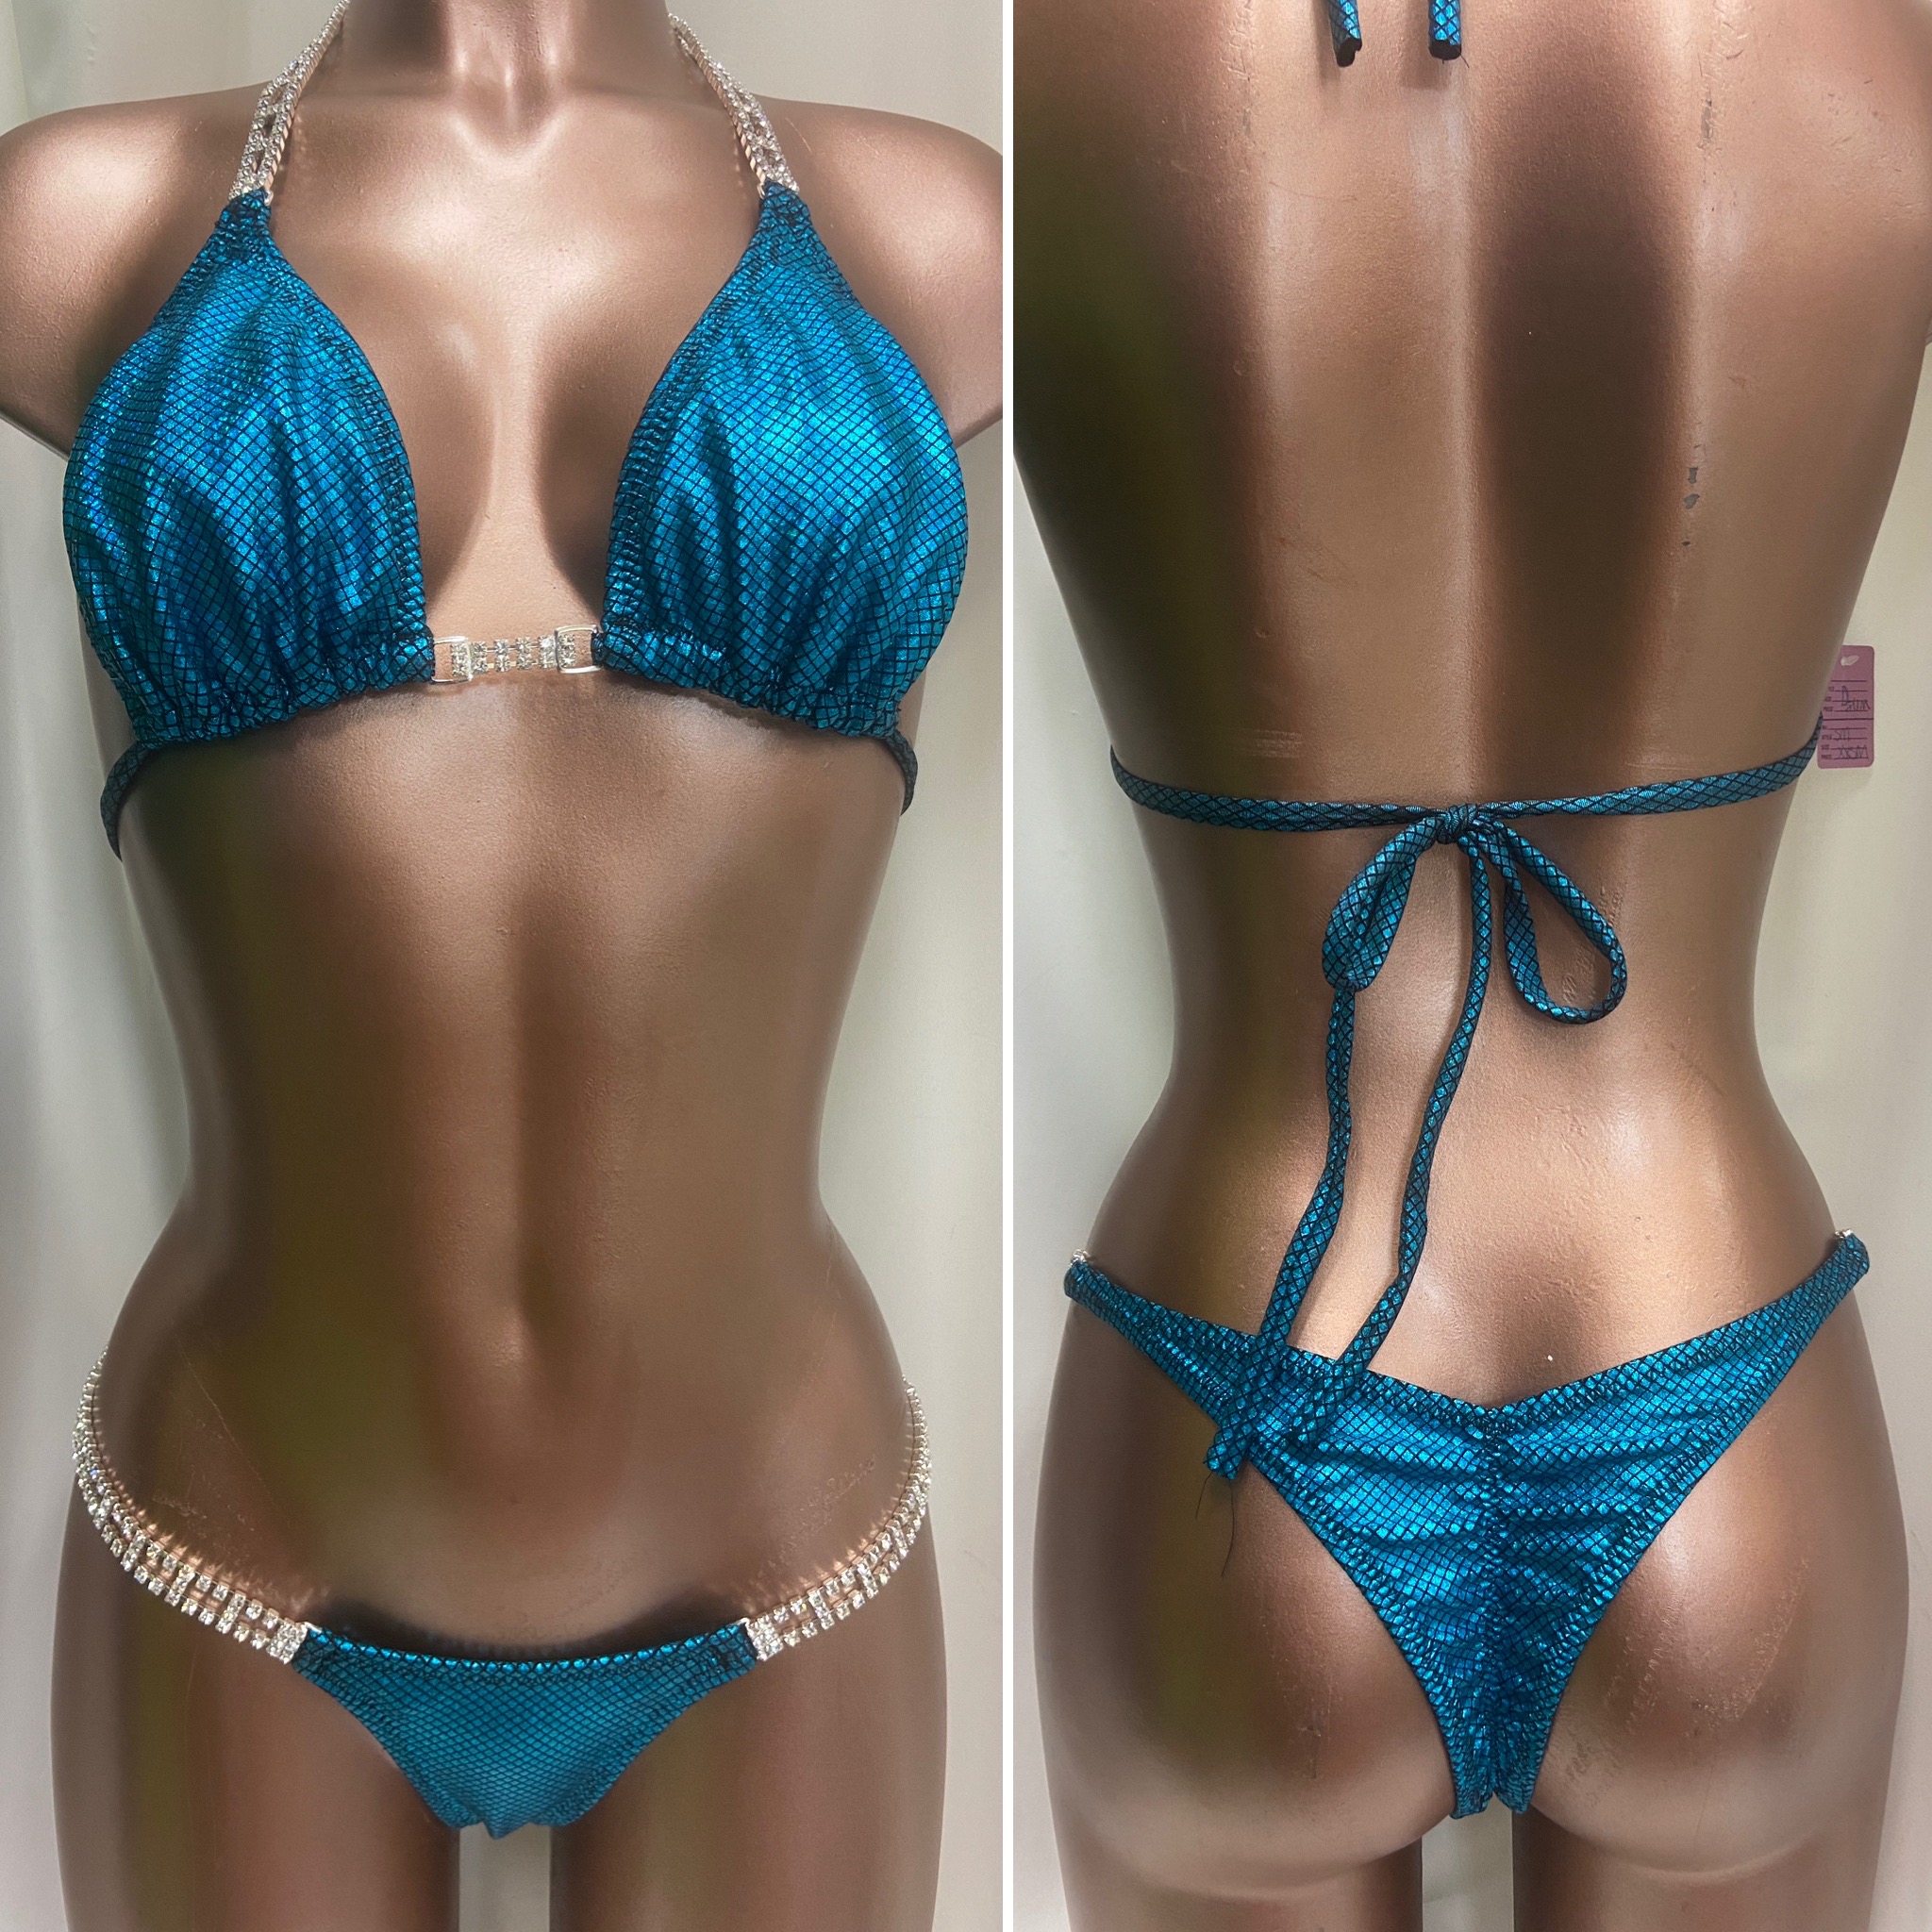 B7
Aqua diamond hologram bikini
D slim sliding top
small front , xxsmall V cut back
$155 